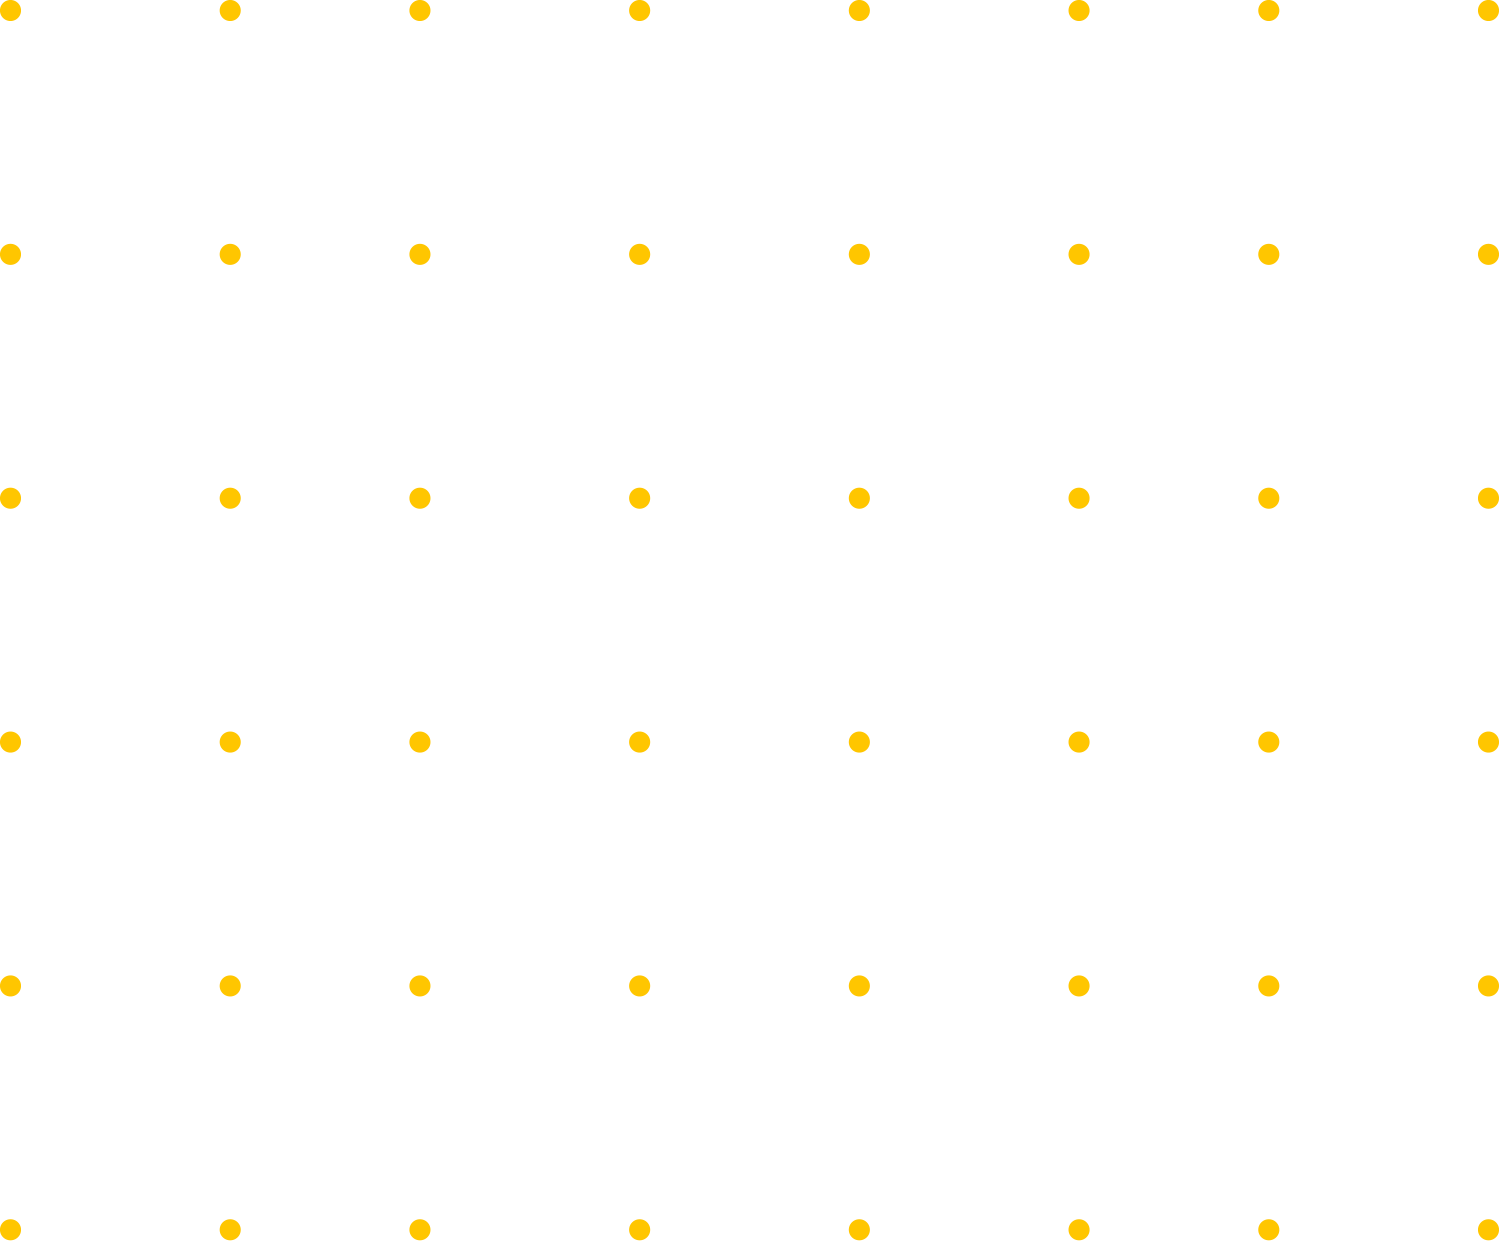 dot matrix image